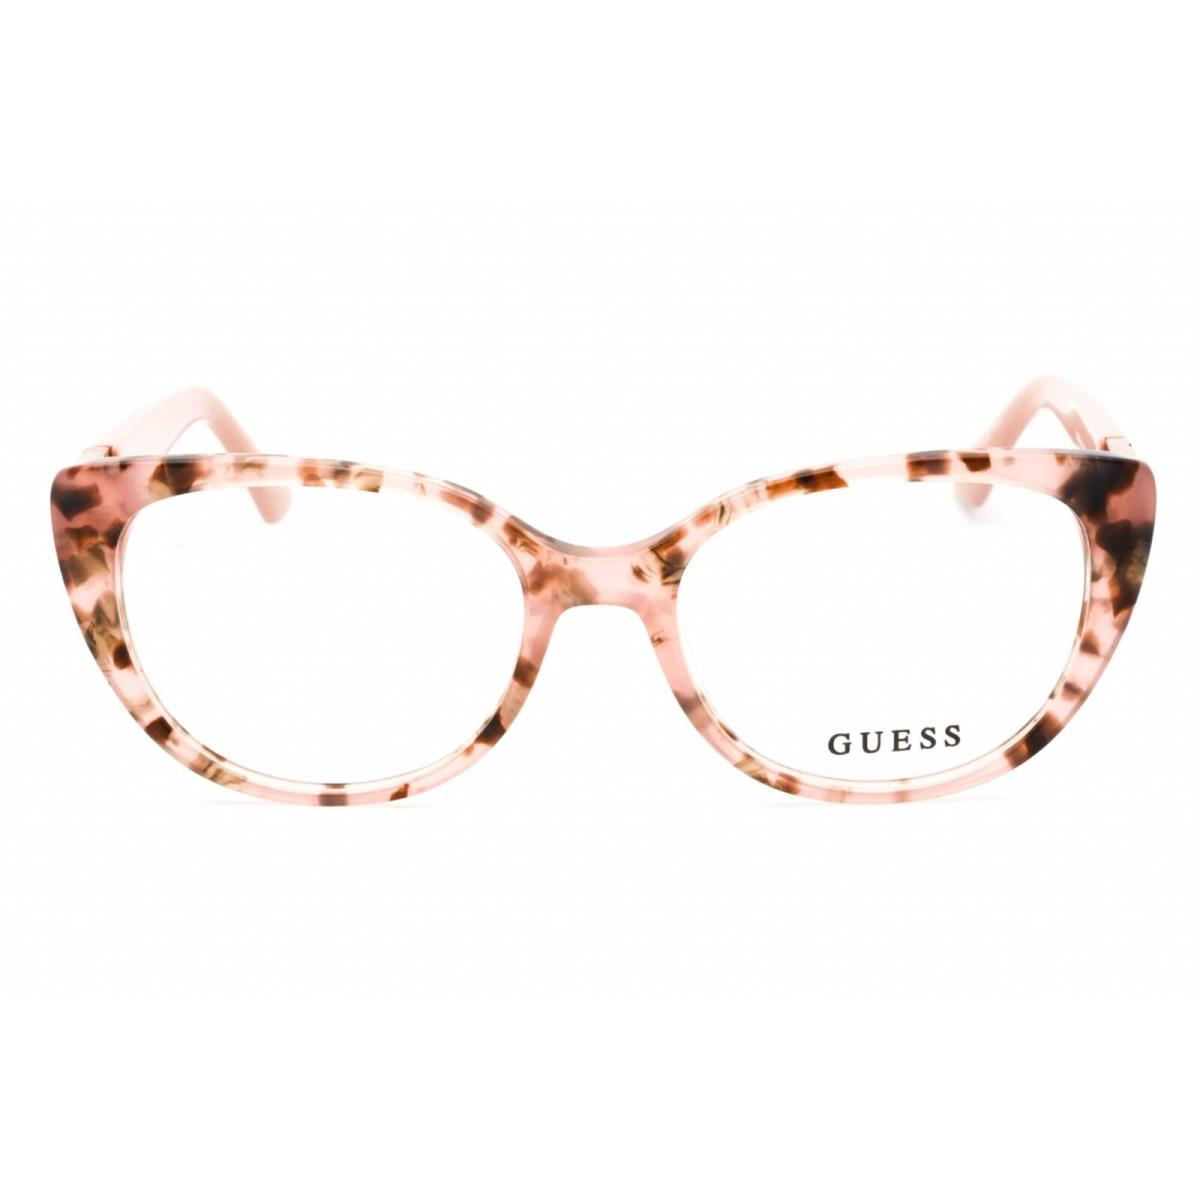 Guess Women`s Eyeglasses Clear Demo Lens Pink Tortoise Cat Eye Frame GU2908 074